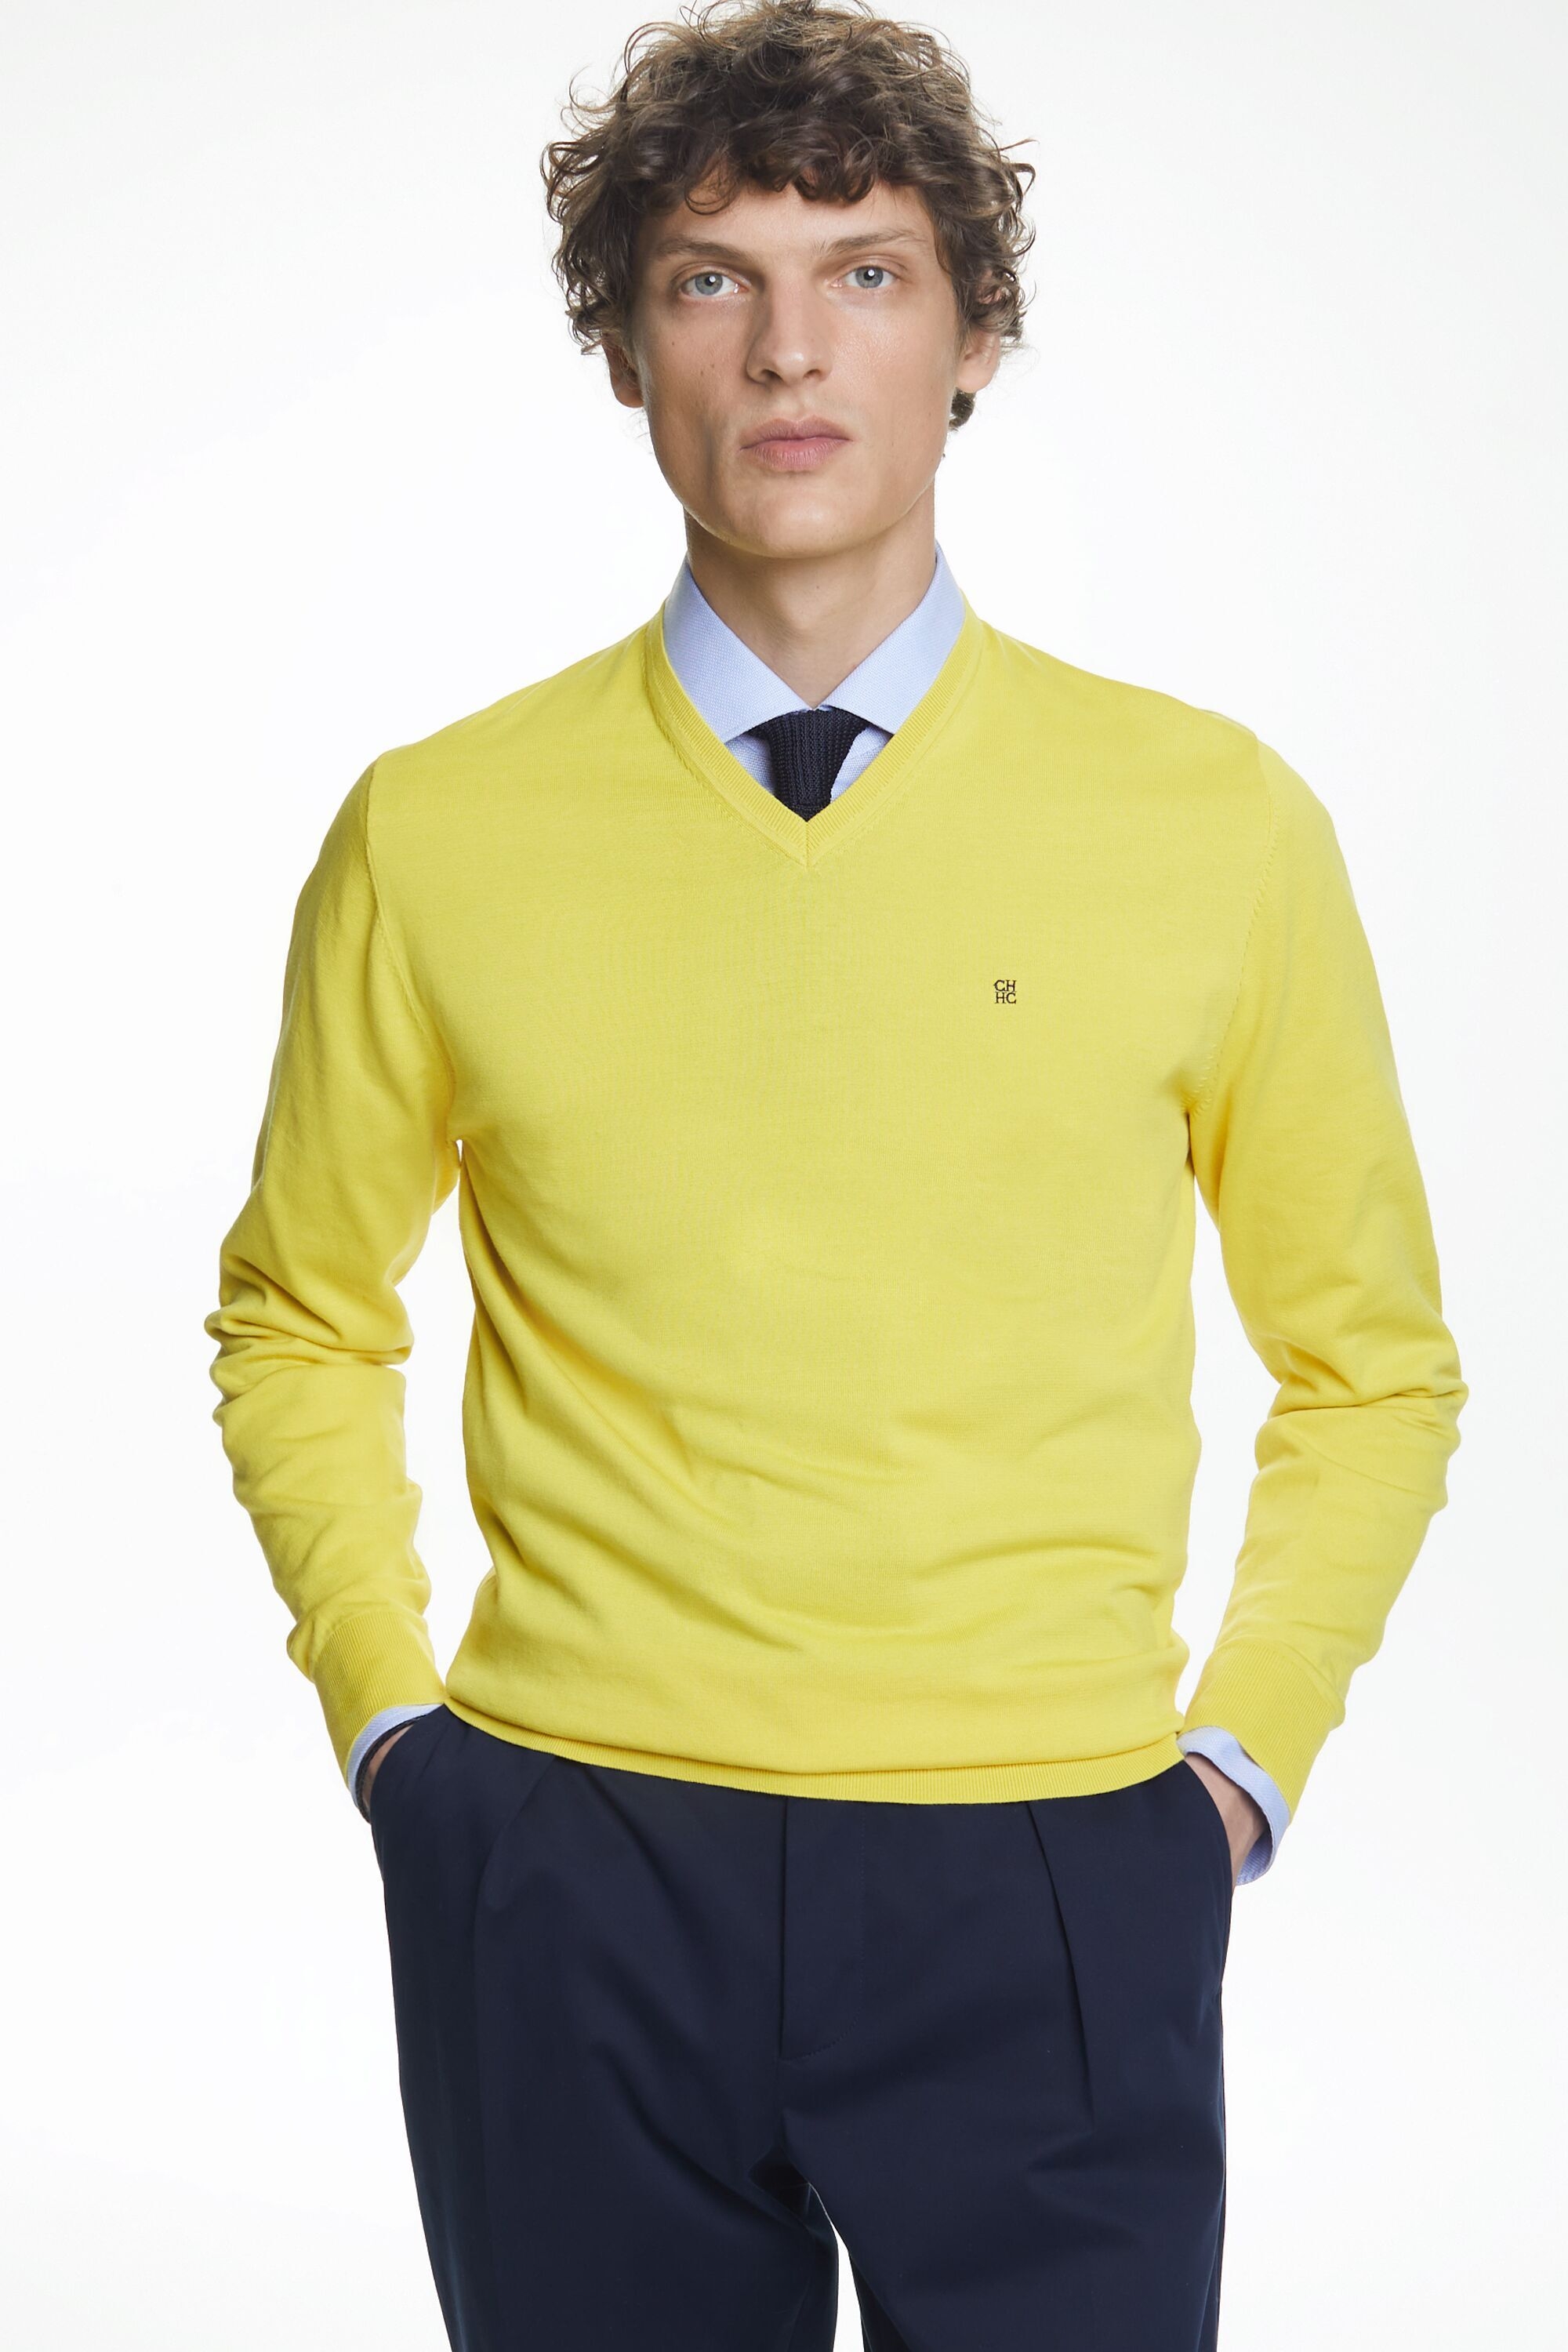 Malo Optimum Men's Yellow 100% Cashmere V-Neck Pullover Sweater